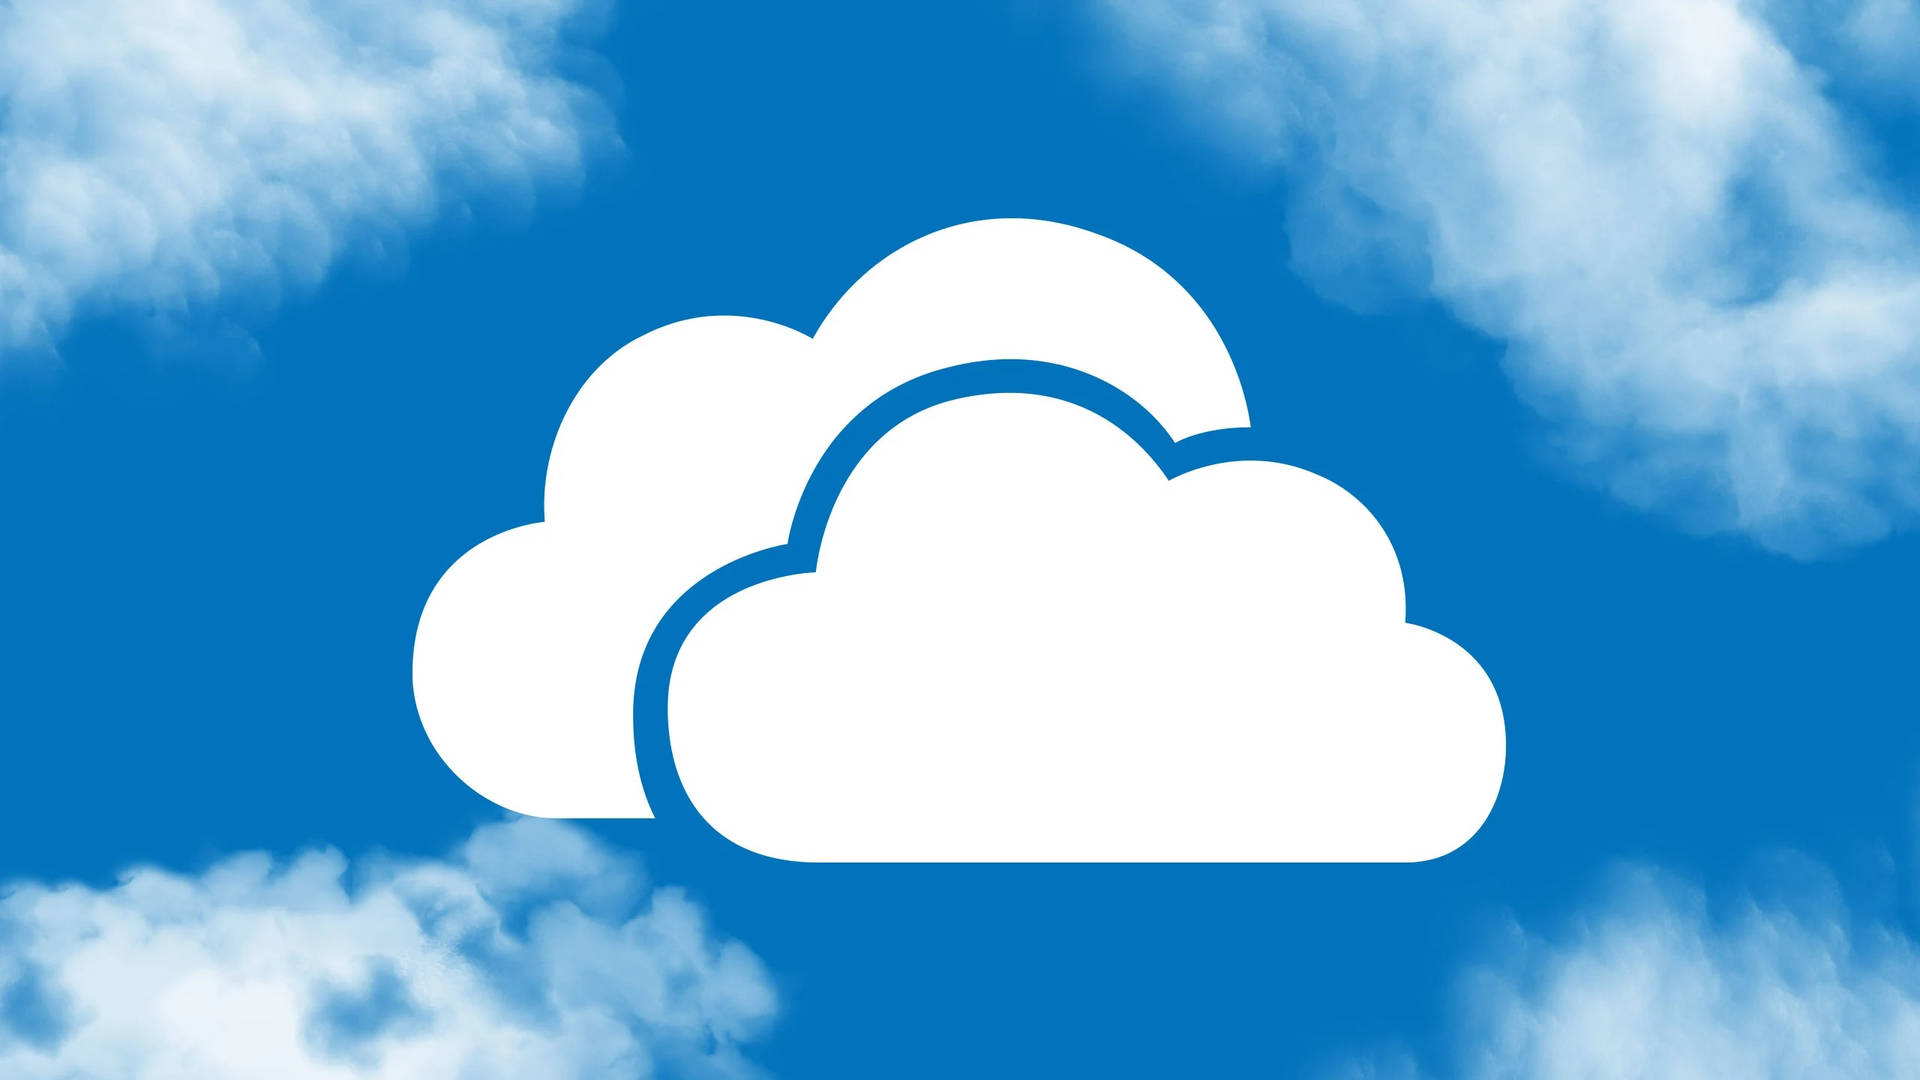 Light Blue Aesthetic Cloud Storage Symbol Background